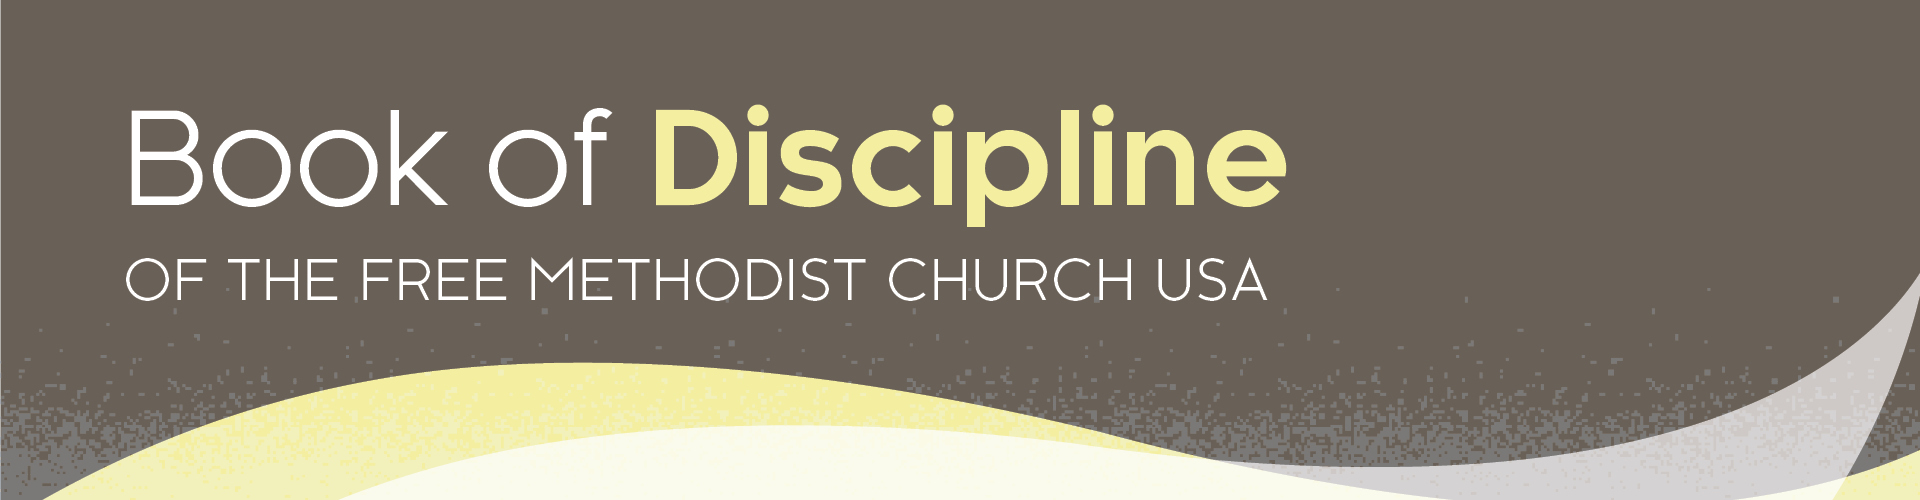 Boof of Discipline of the Free Methodist Church USA